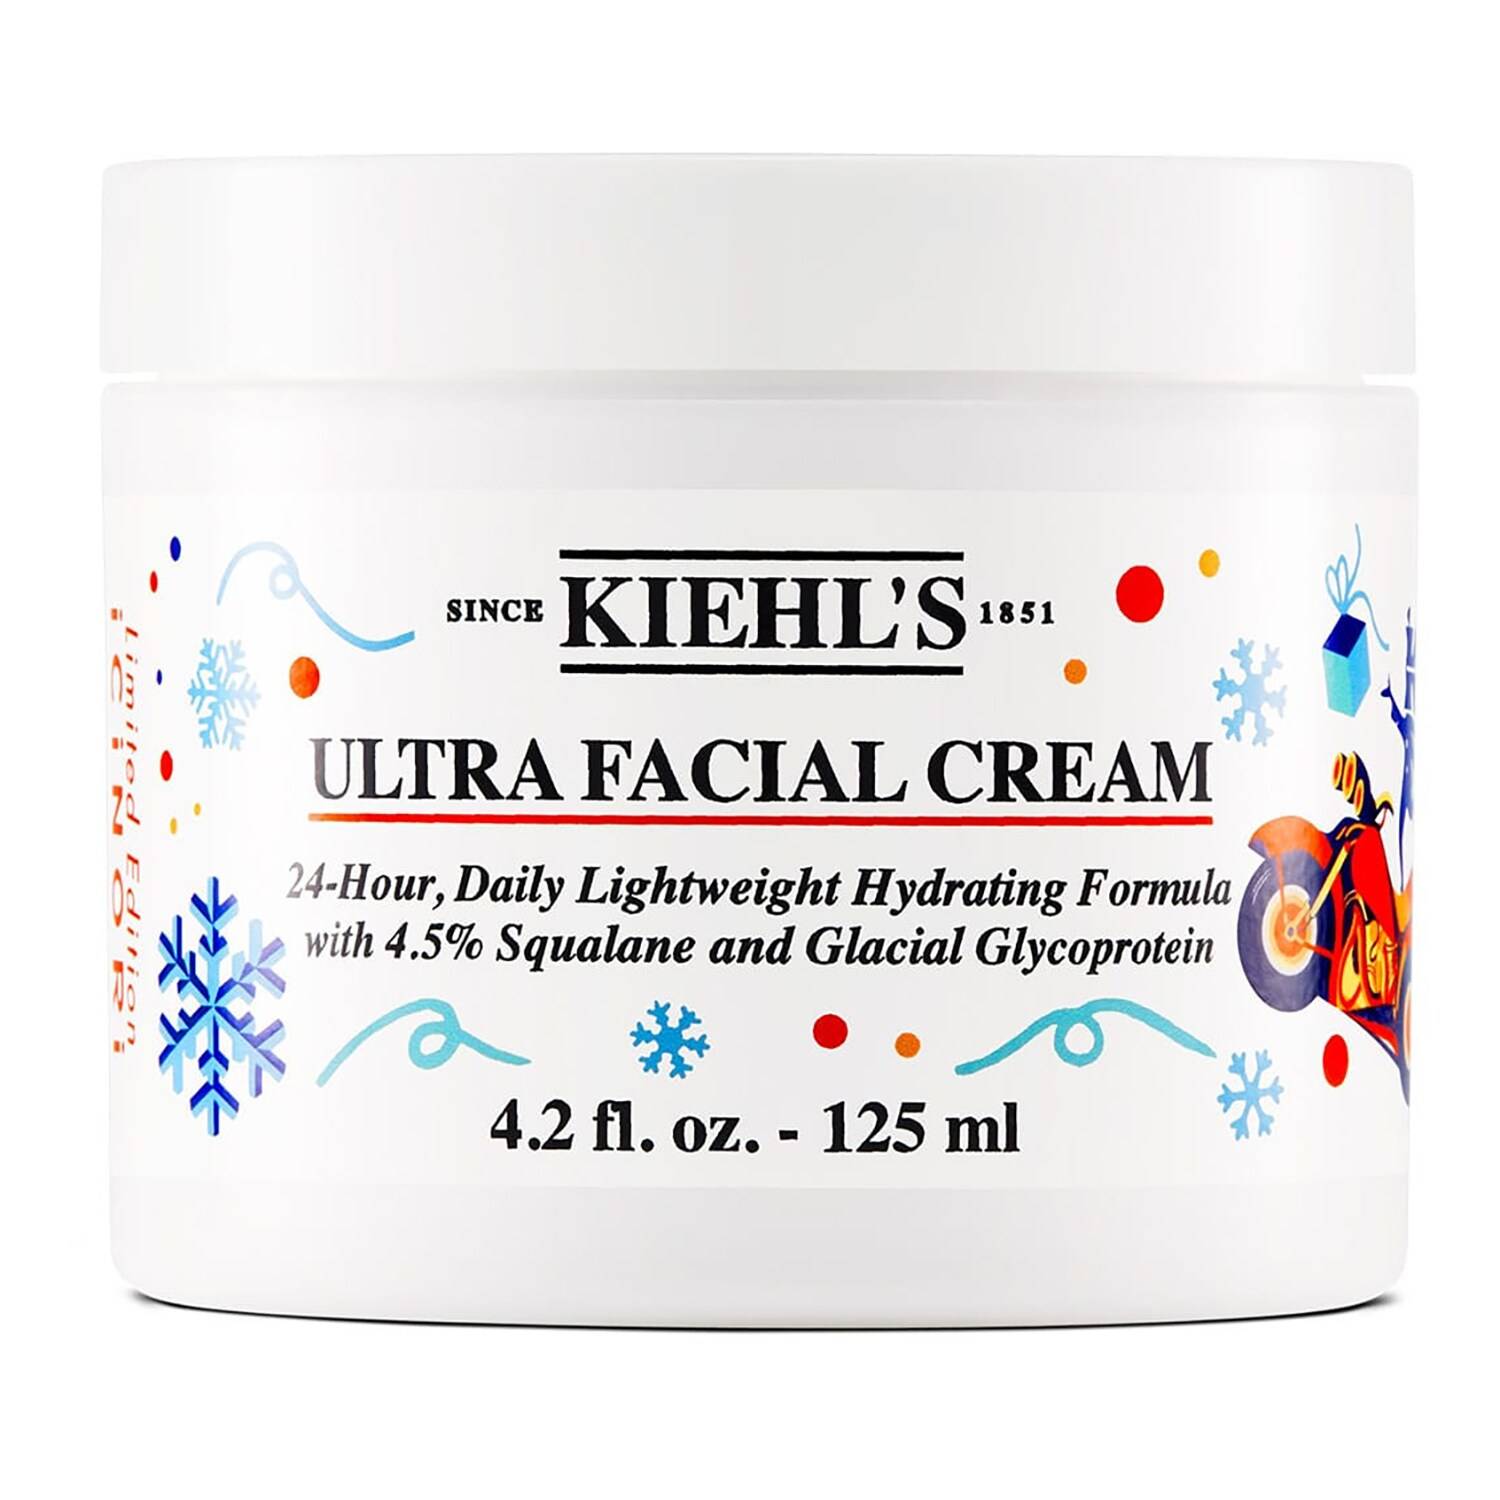 KIEHL'S SINCE 1851 Kiehl's Limited edition Ultra Facial Cream 125ml